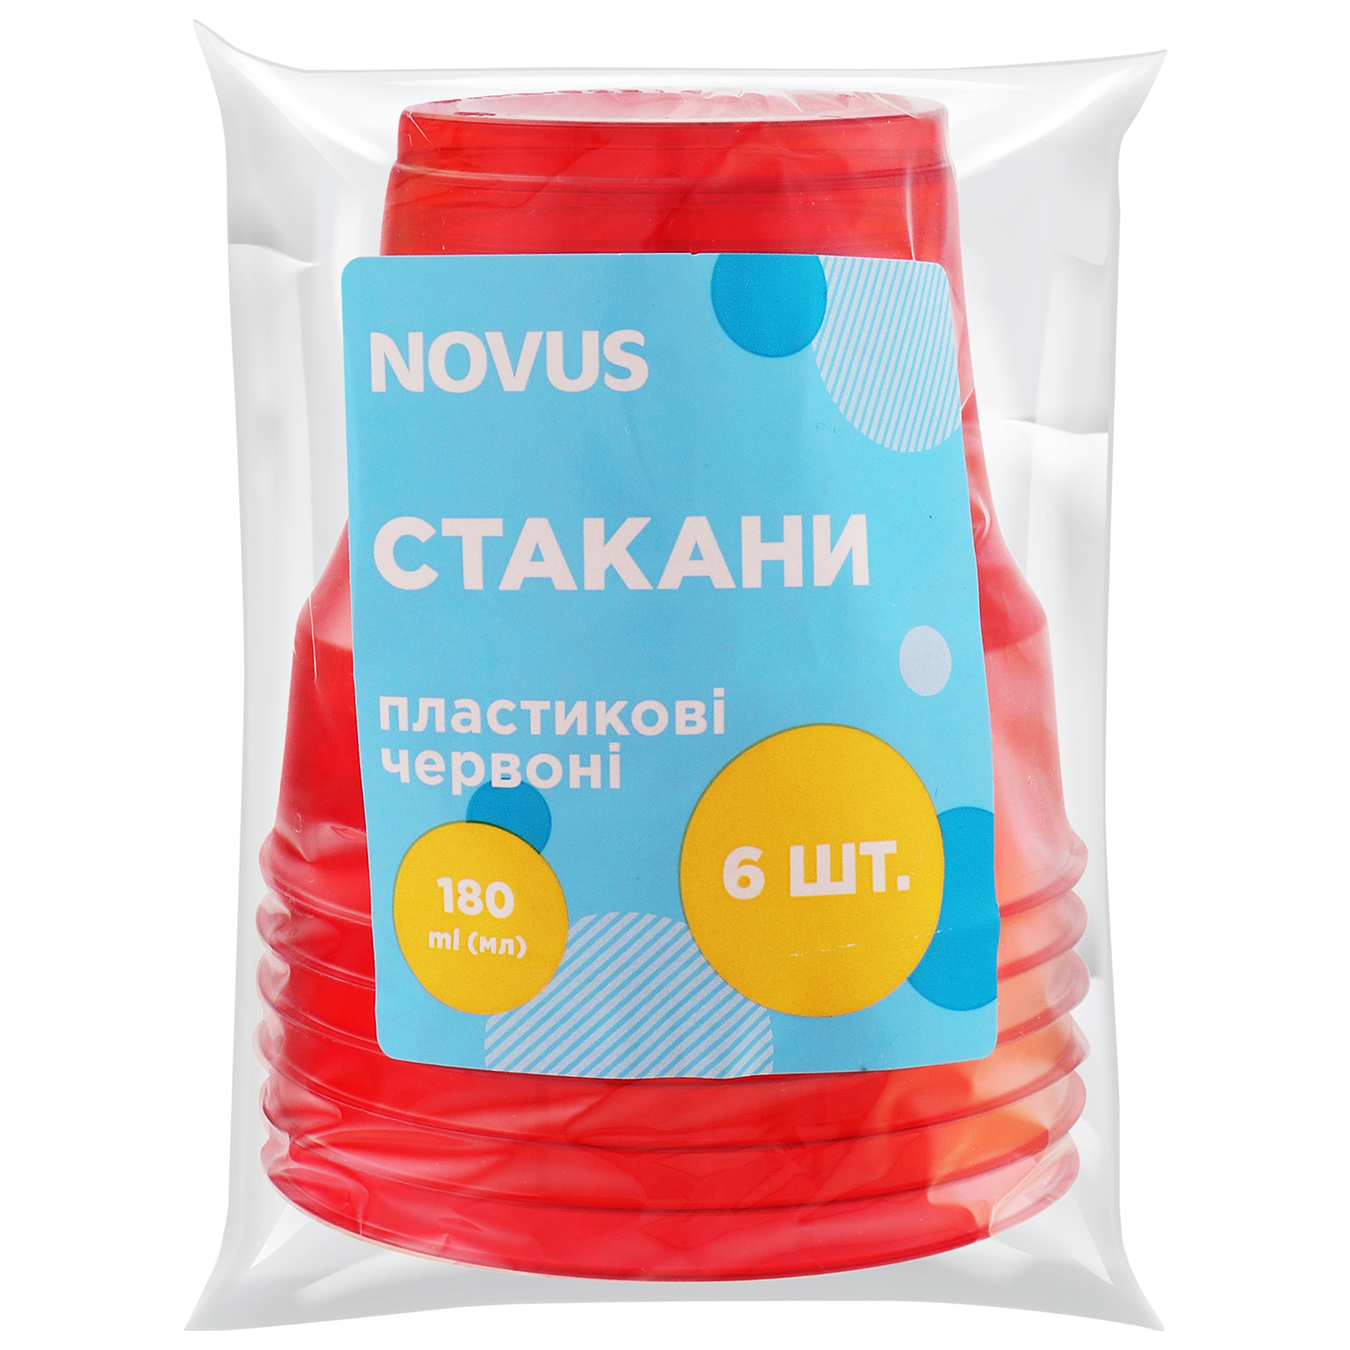 Novus Red Plastic Glass 180ml 6pcs